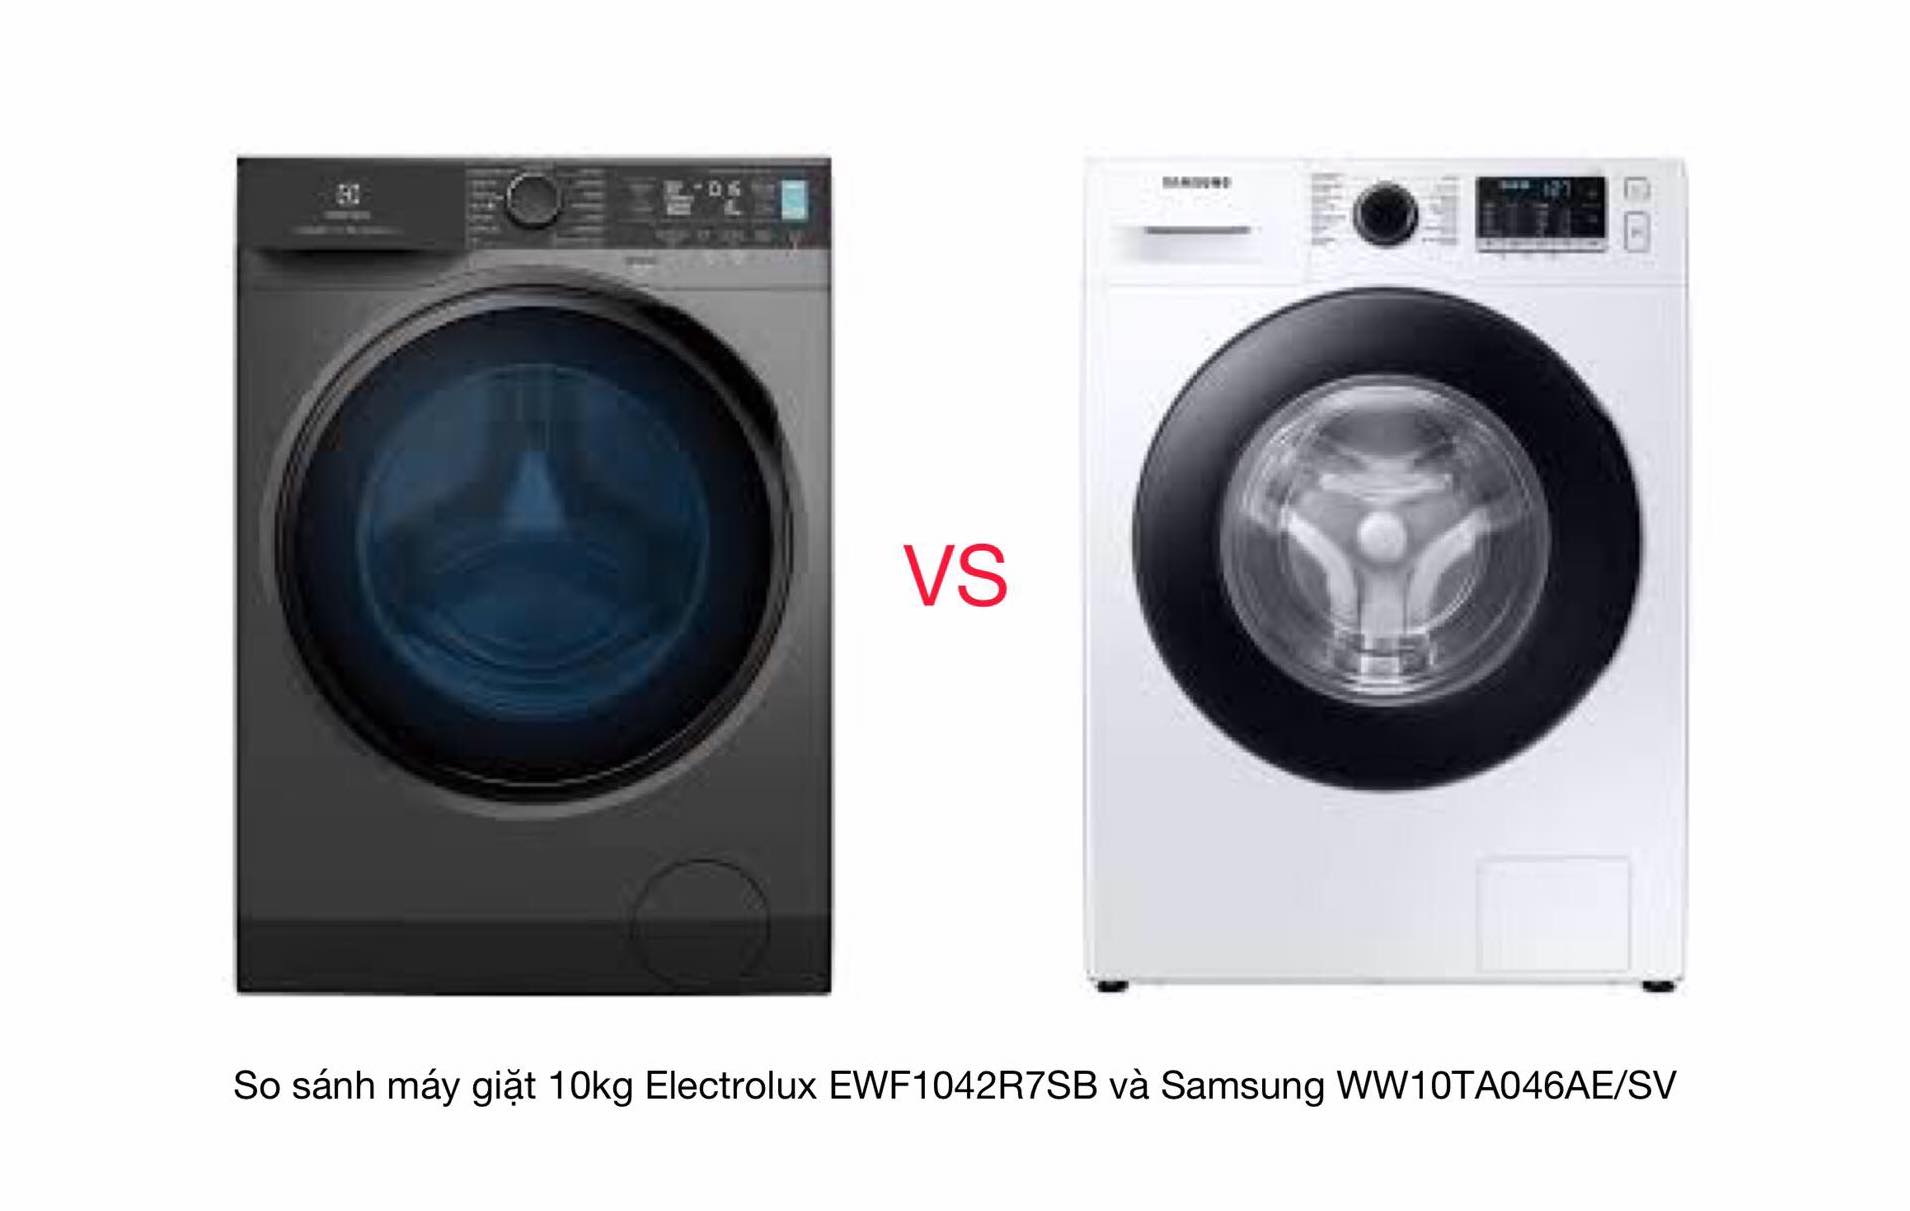 So sánh máy giặt 10kg Electrolux EWF1042R7SB và Samsung WW10TA046AE/SV